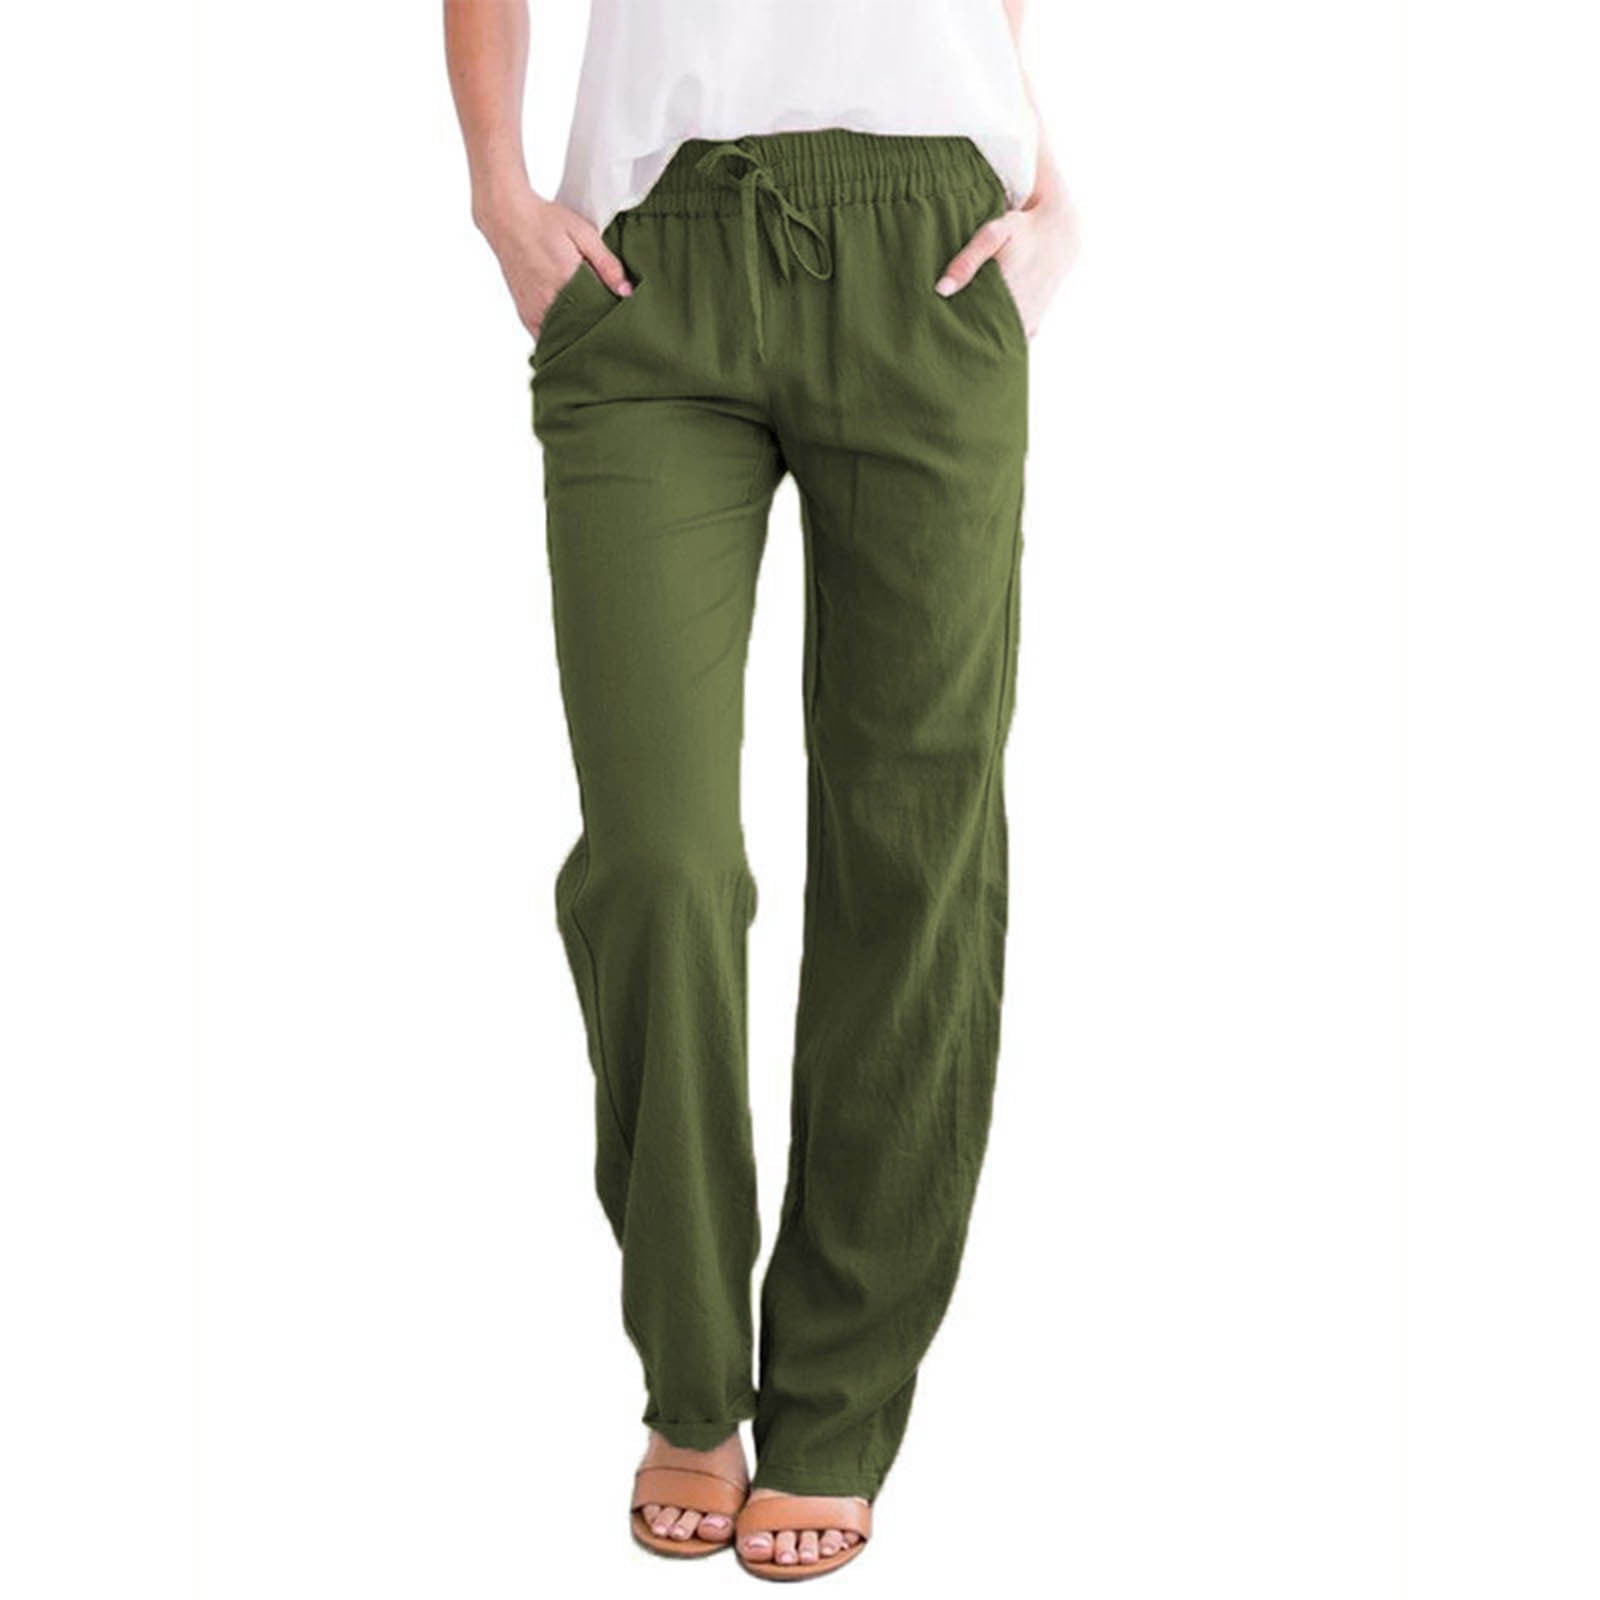 BECLOTH Cotton linen Pants For Women Tightness Trousers Pocket Casual Plus  Size Pants